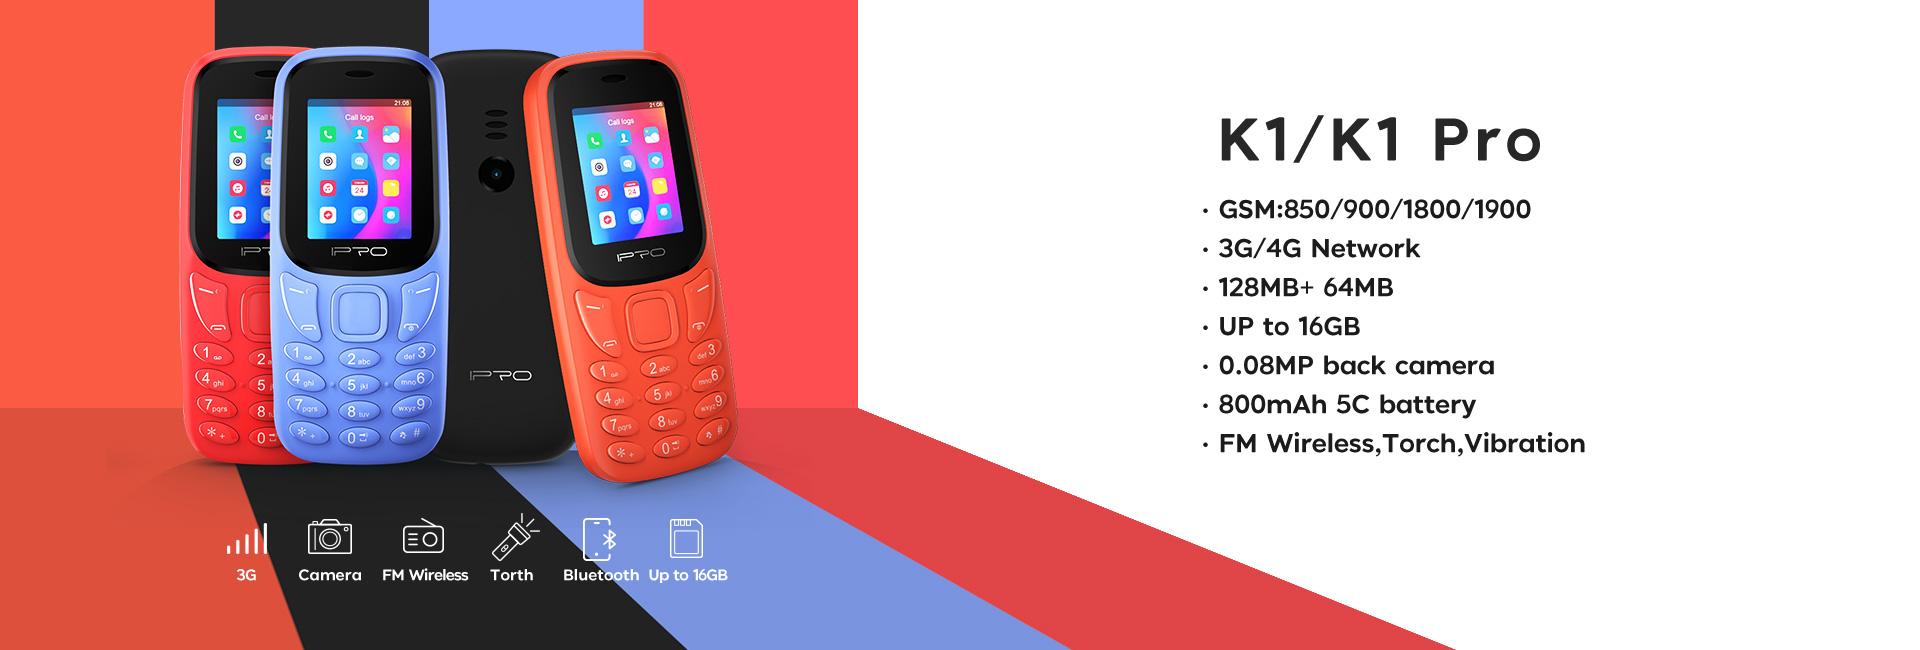 High Quality K1 Pro Dual SIM Card 1.77 Inch 3G/4G Network 0.08MP Camera 800mAh Battery Premium Button Phone